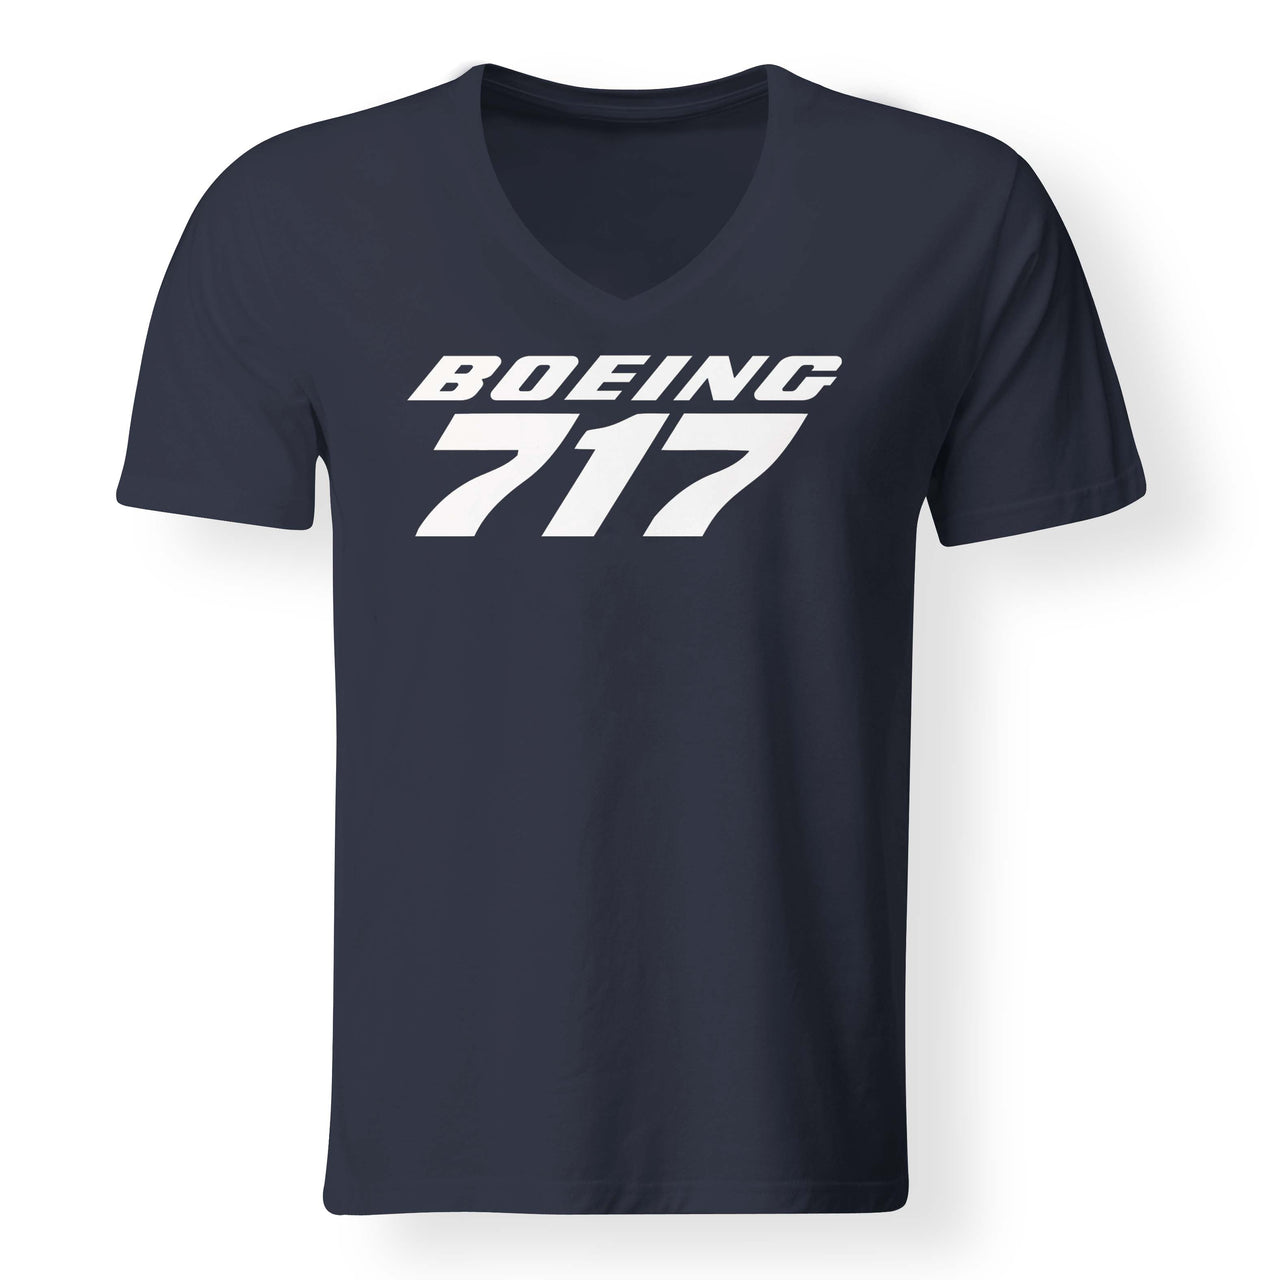 Boeing 717 & Text Designed V-Neck T-Shirts